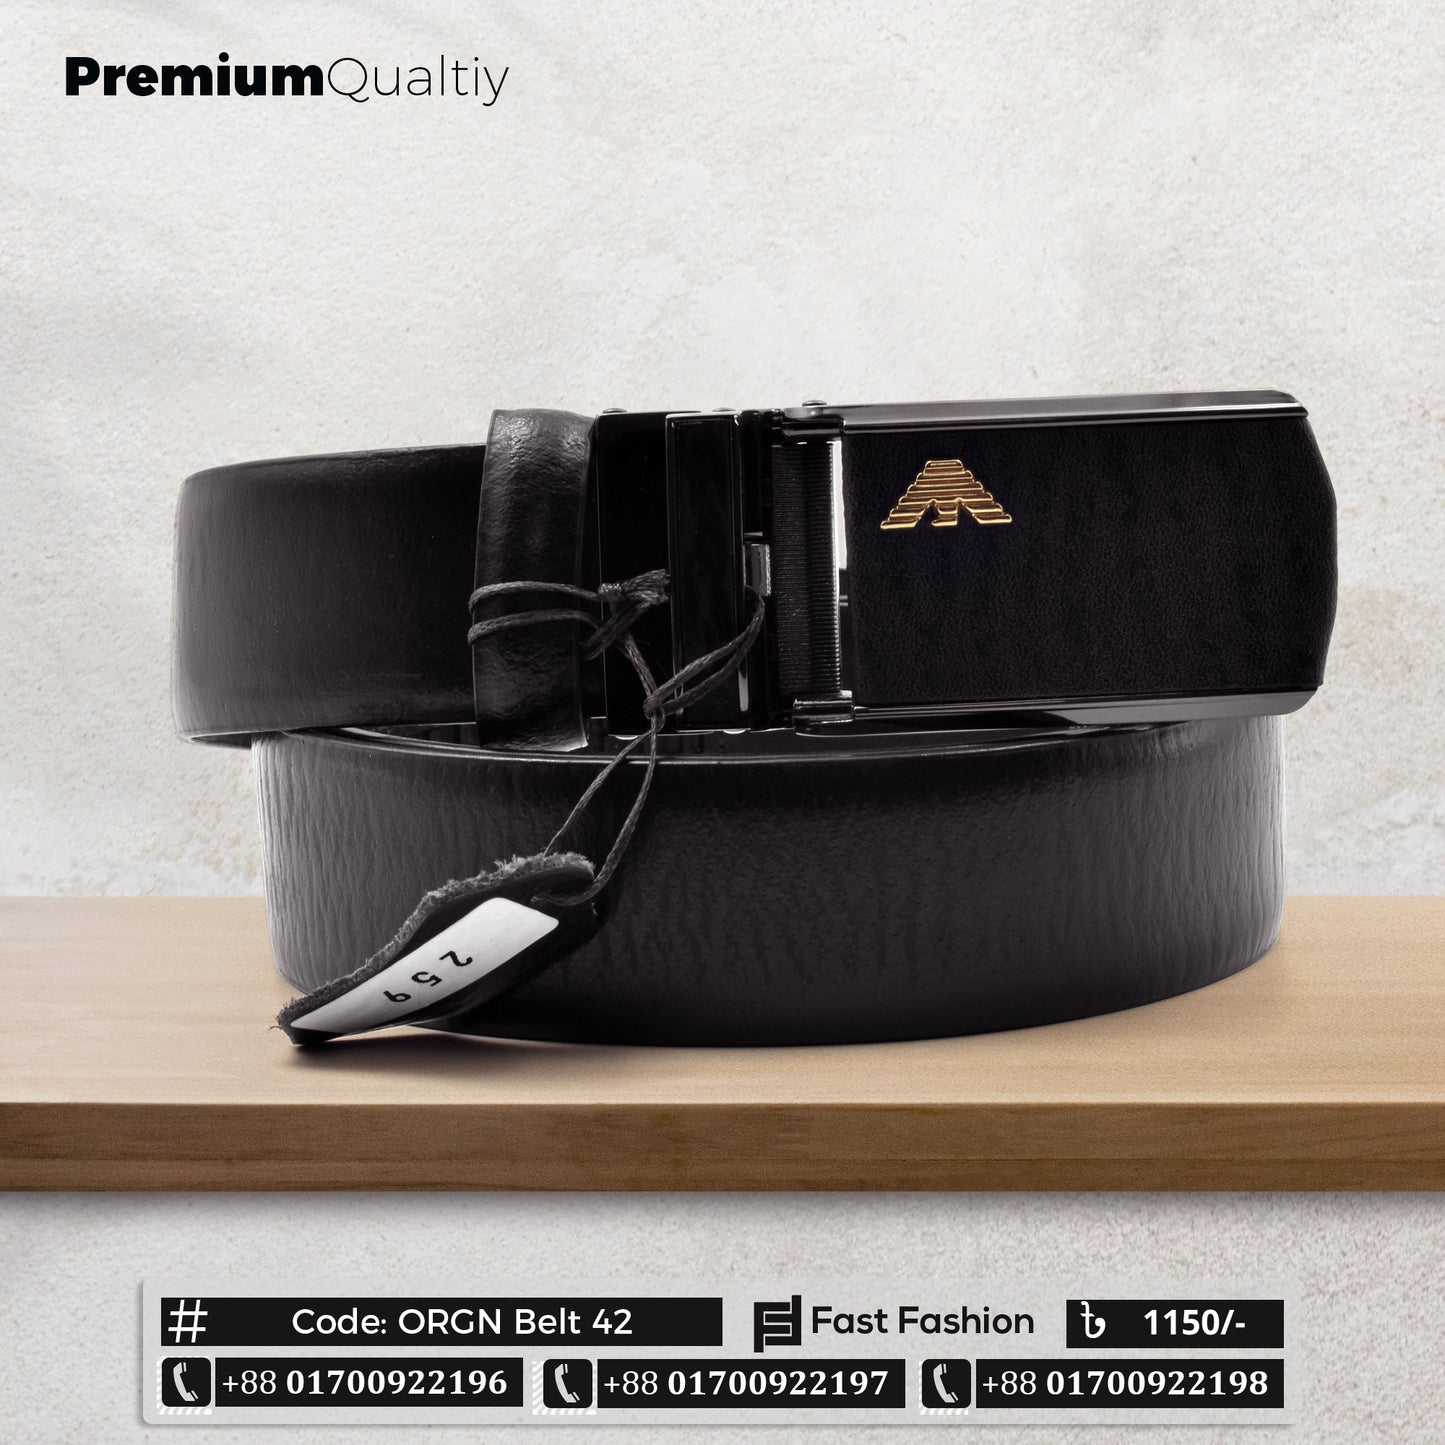 Premium Quality Original Leather Belt - ORGN Belt 42